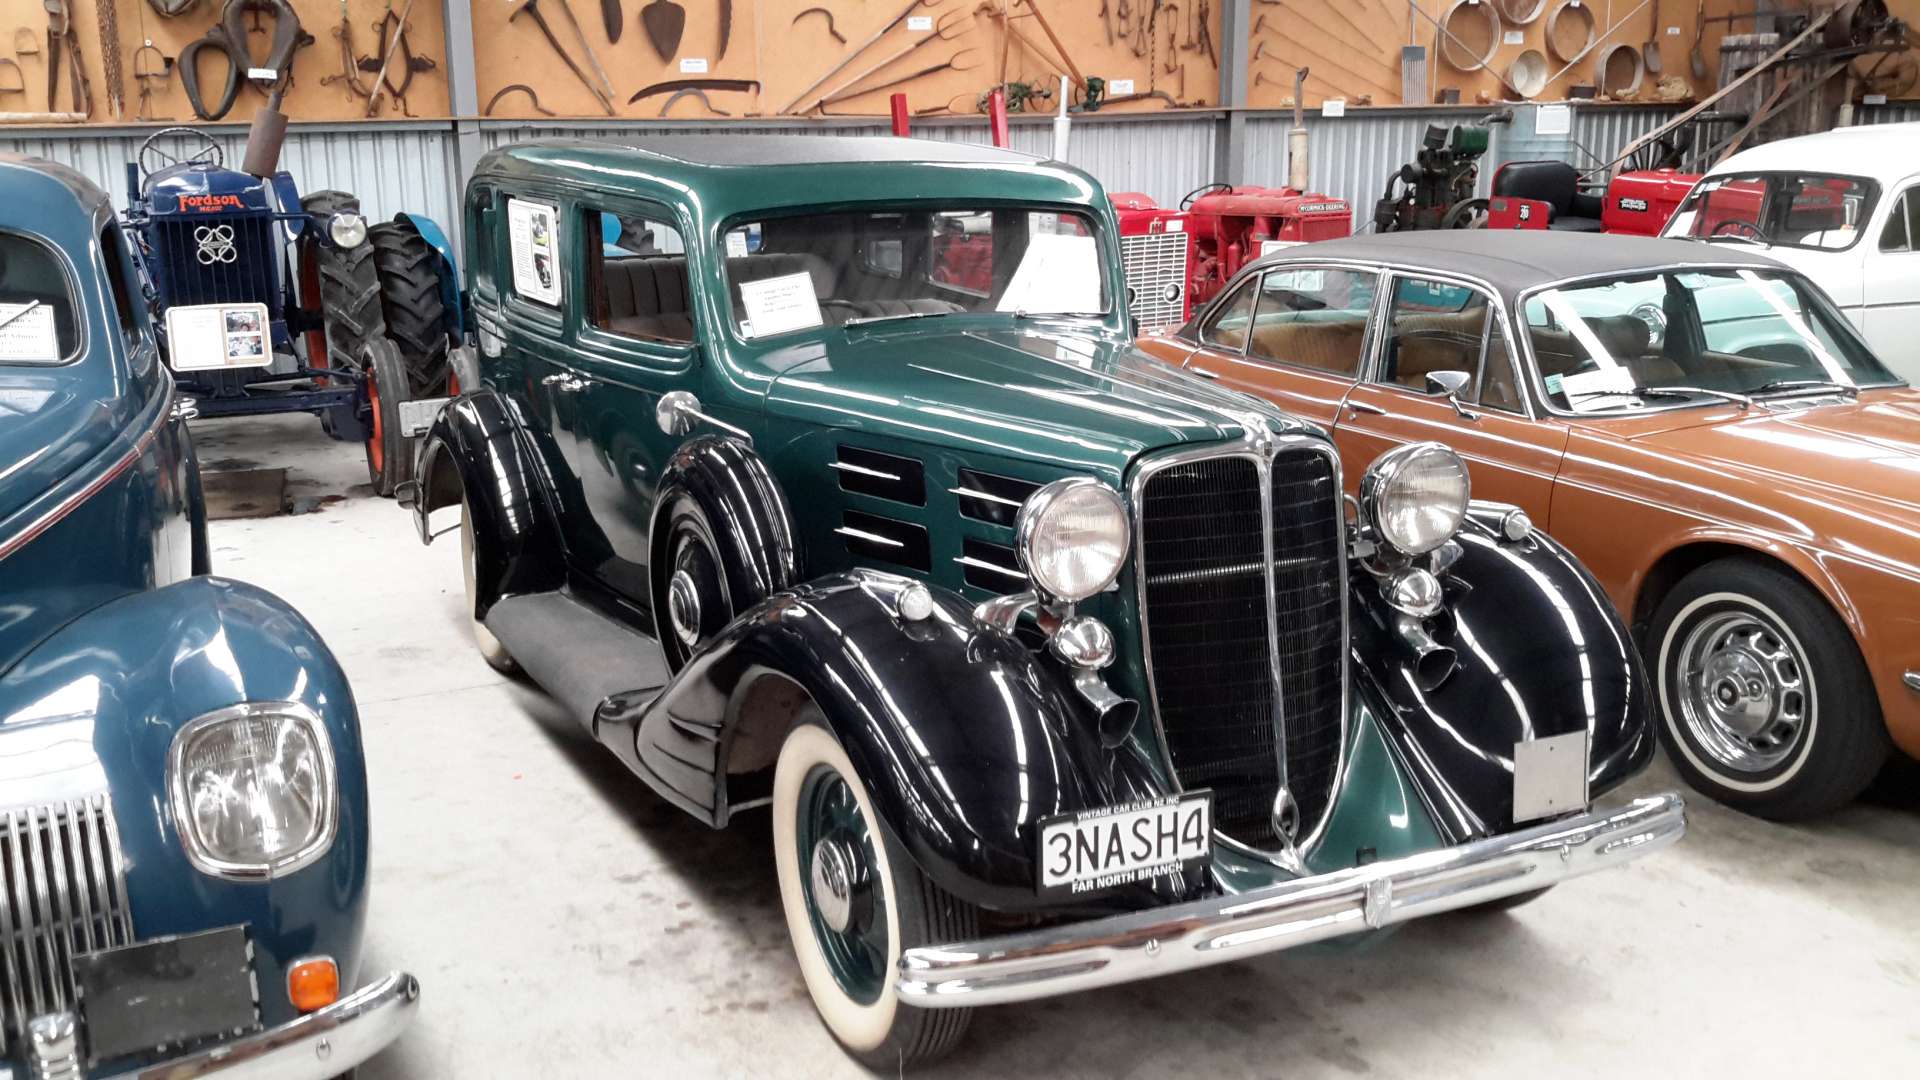 Vintage cars to enjoy at Matthews Vintage Collection